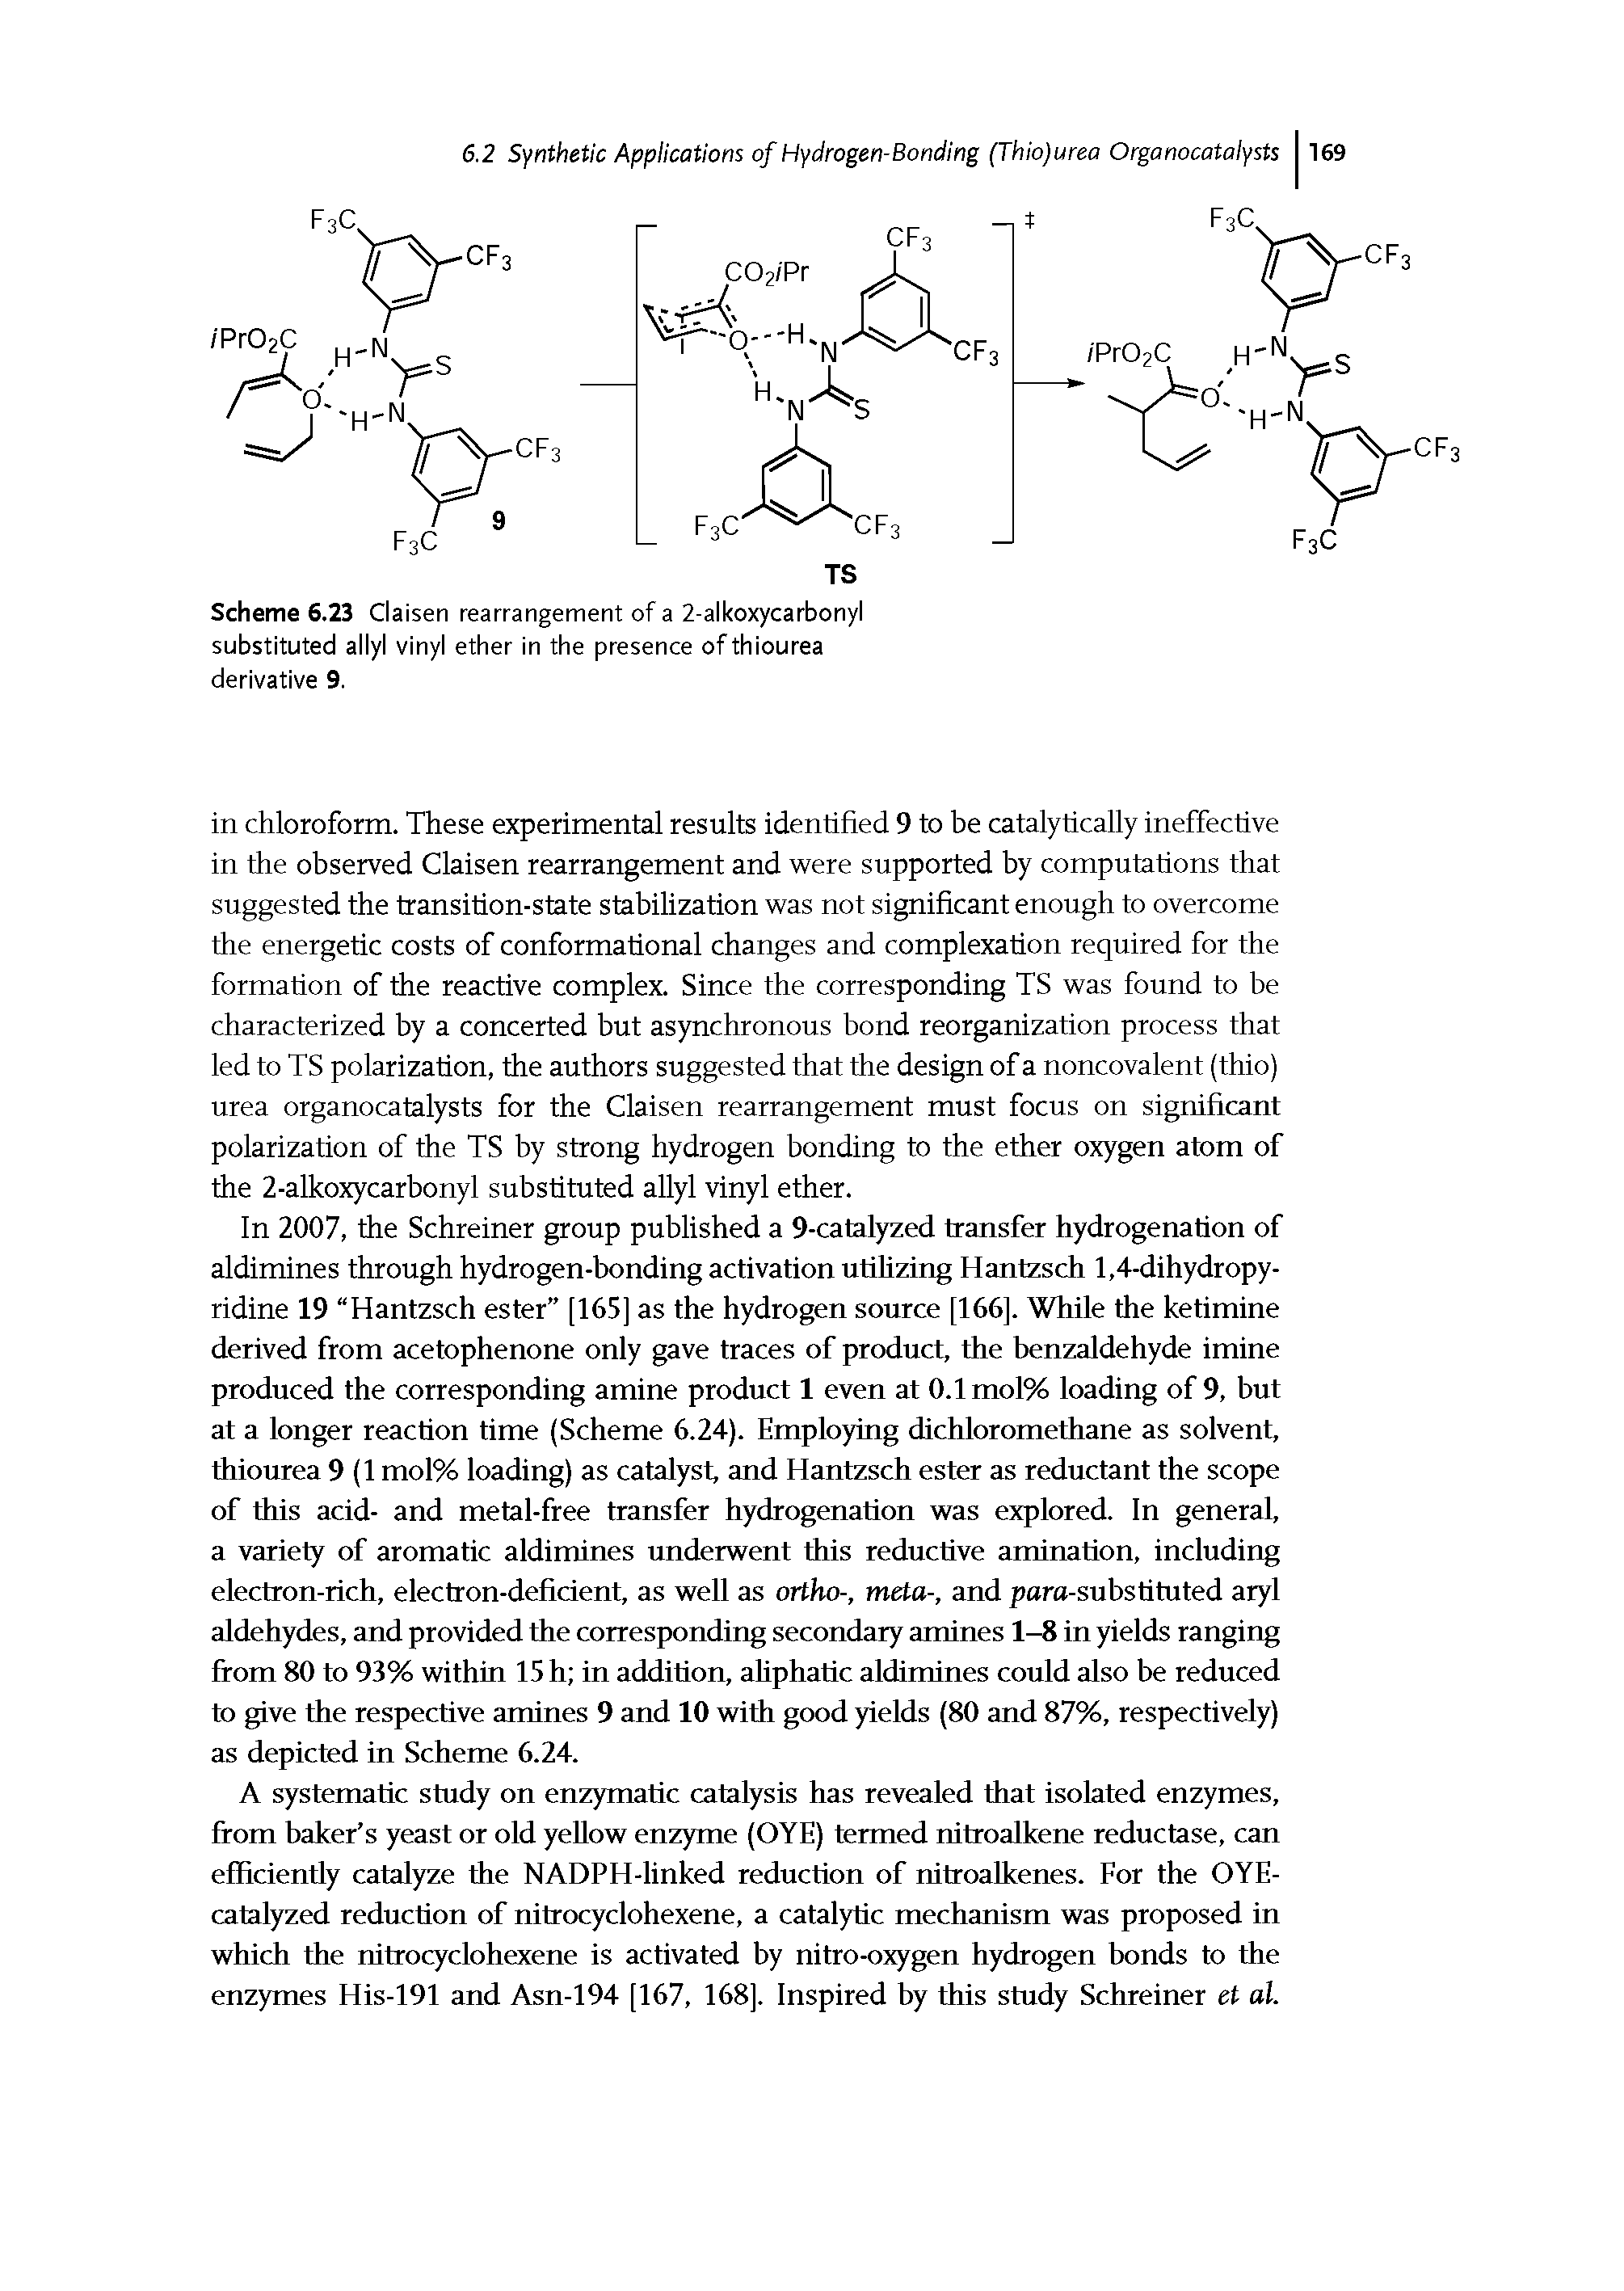 Scheme 6.23 Claisen rearrangement of a 2-alkoxycarbonyl substituted allyl vinyl ether in the presence of thiourea derivative 9.